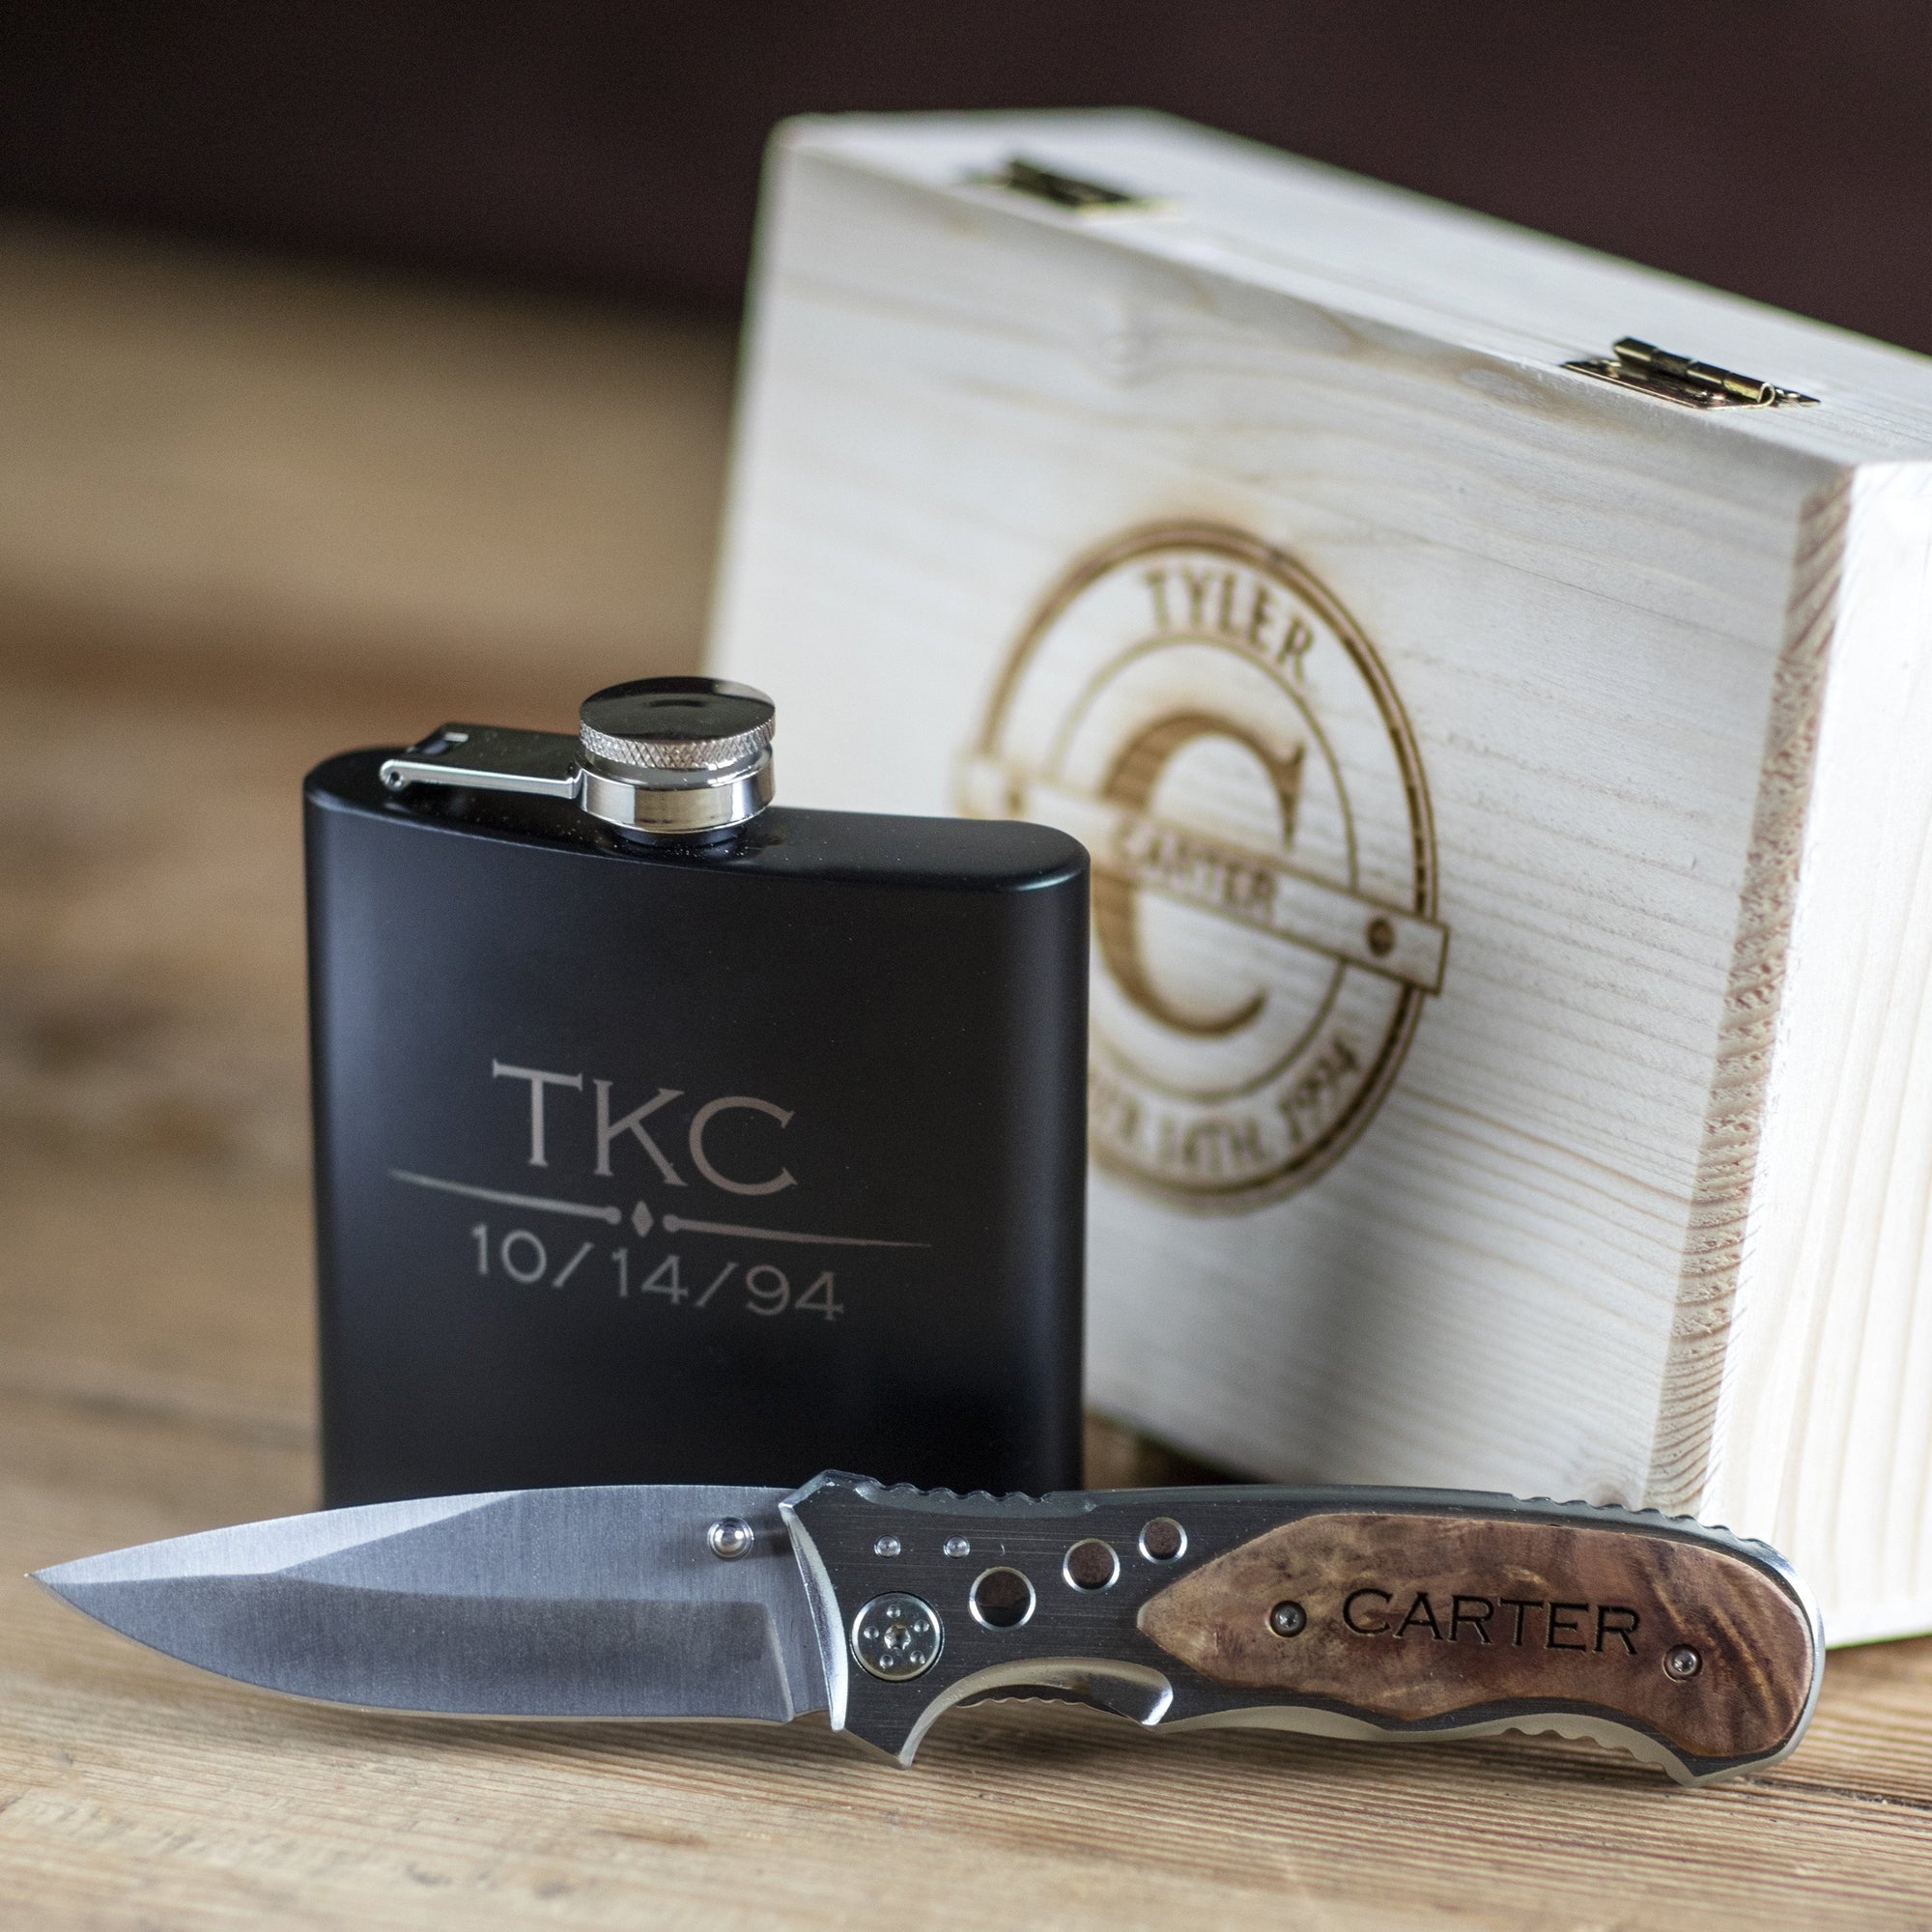 Premium EDC Slim Pocket Knife - Groovy Groomsmen Gifts